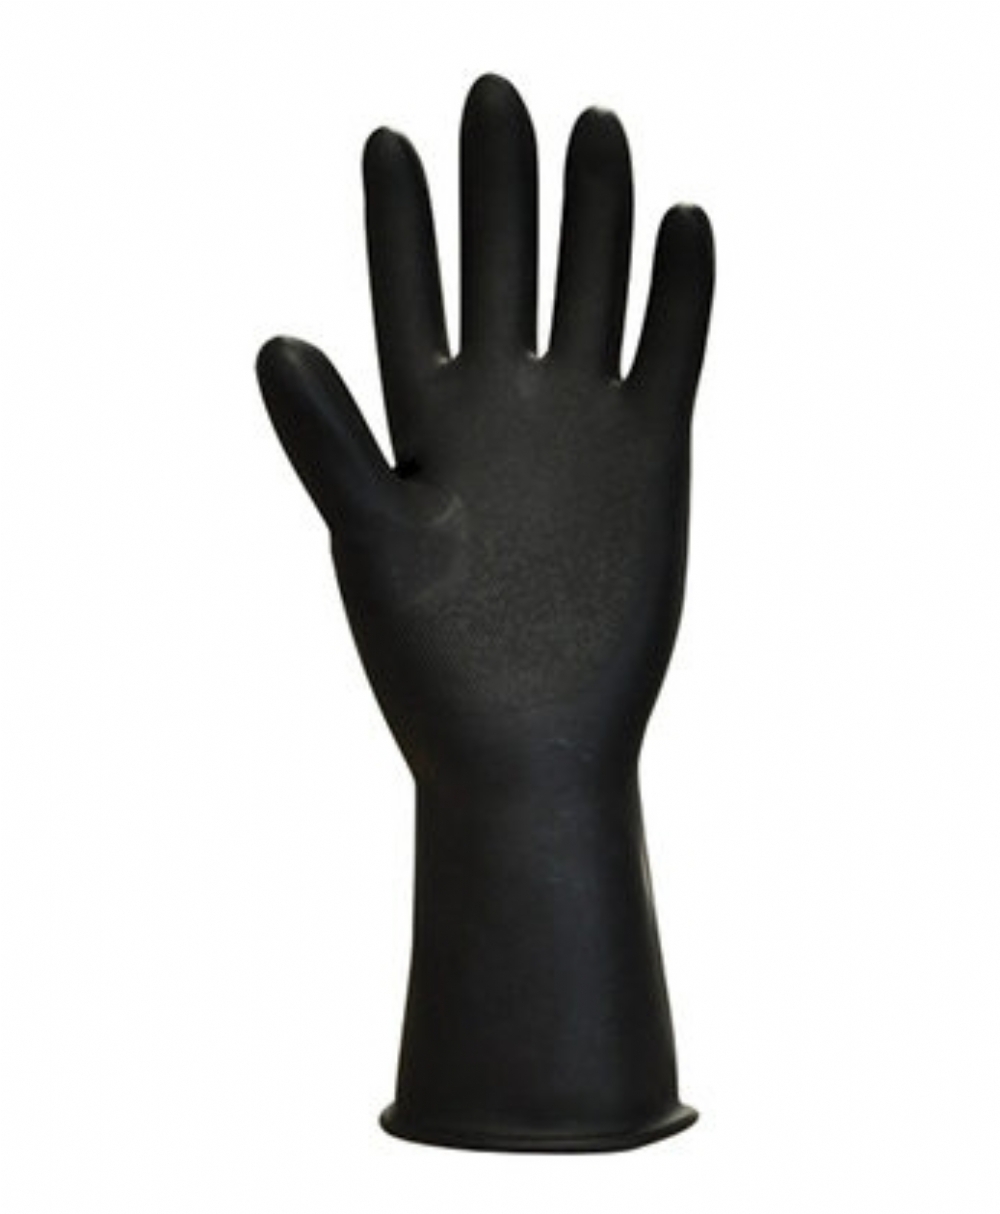 Chemprotec Gloves